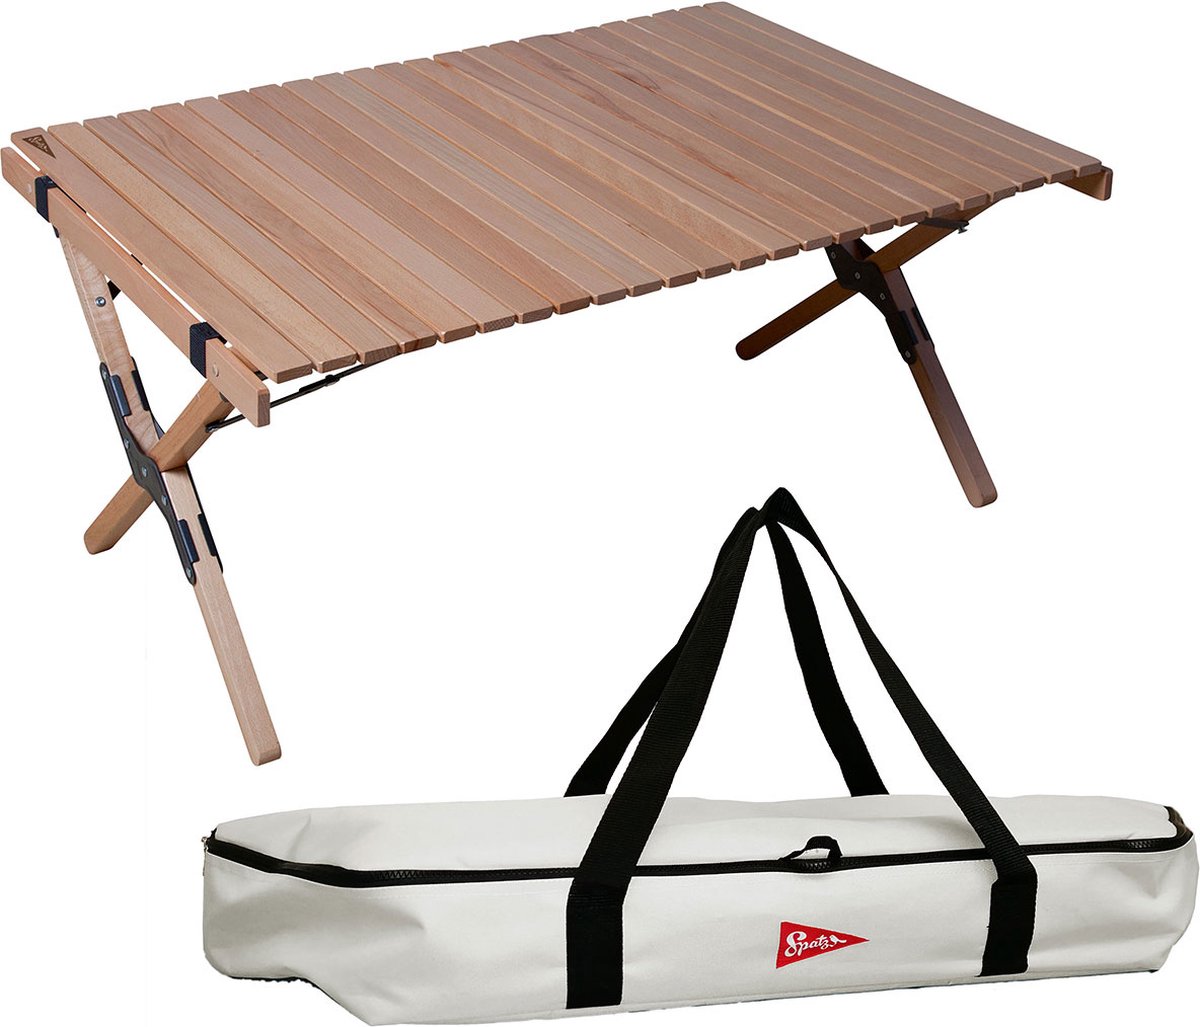 SPATZ Table Sandpiper M beige wood - Camping bijzettafel